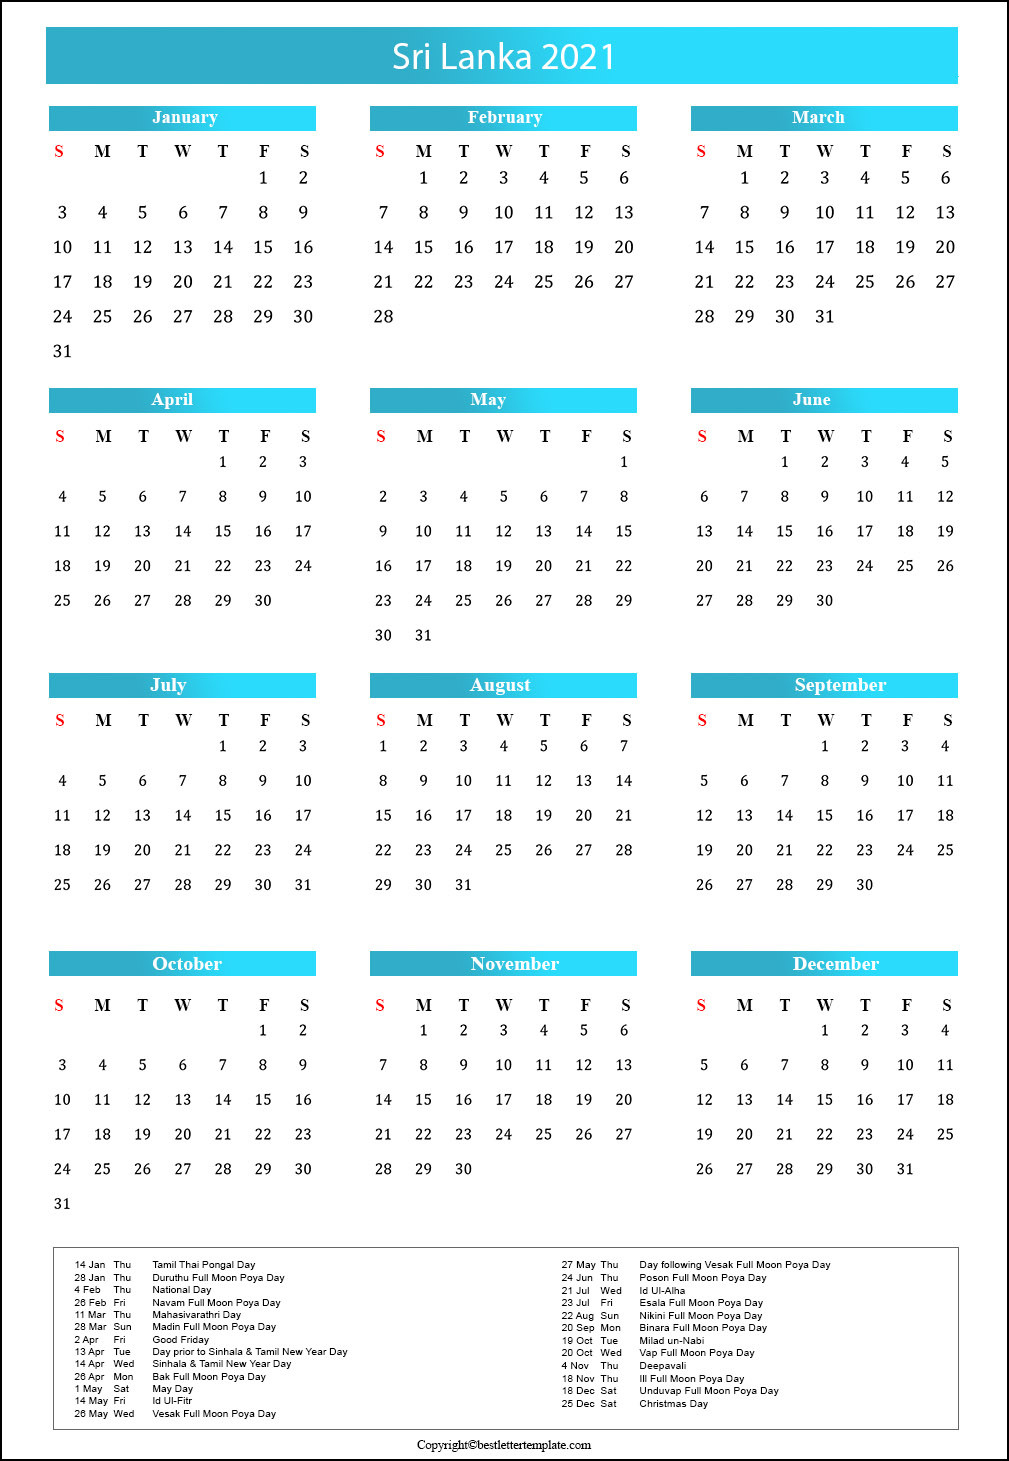 Free Printable Sri Lanka Calendar 2021 With Public Holidays-Mercantile Holiday Calander In Sri Lanka 2021